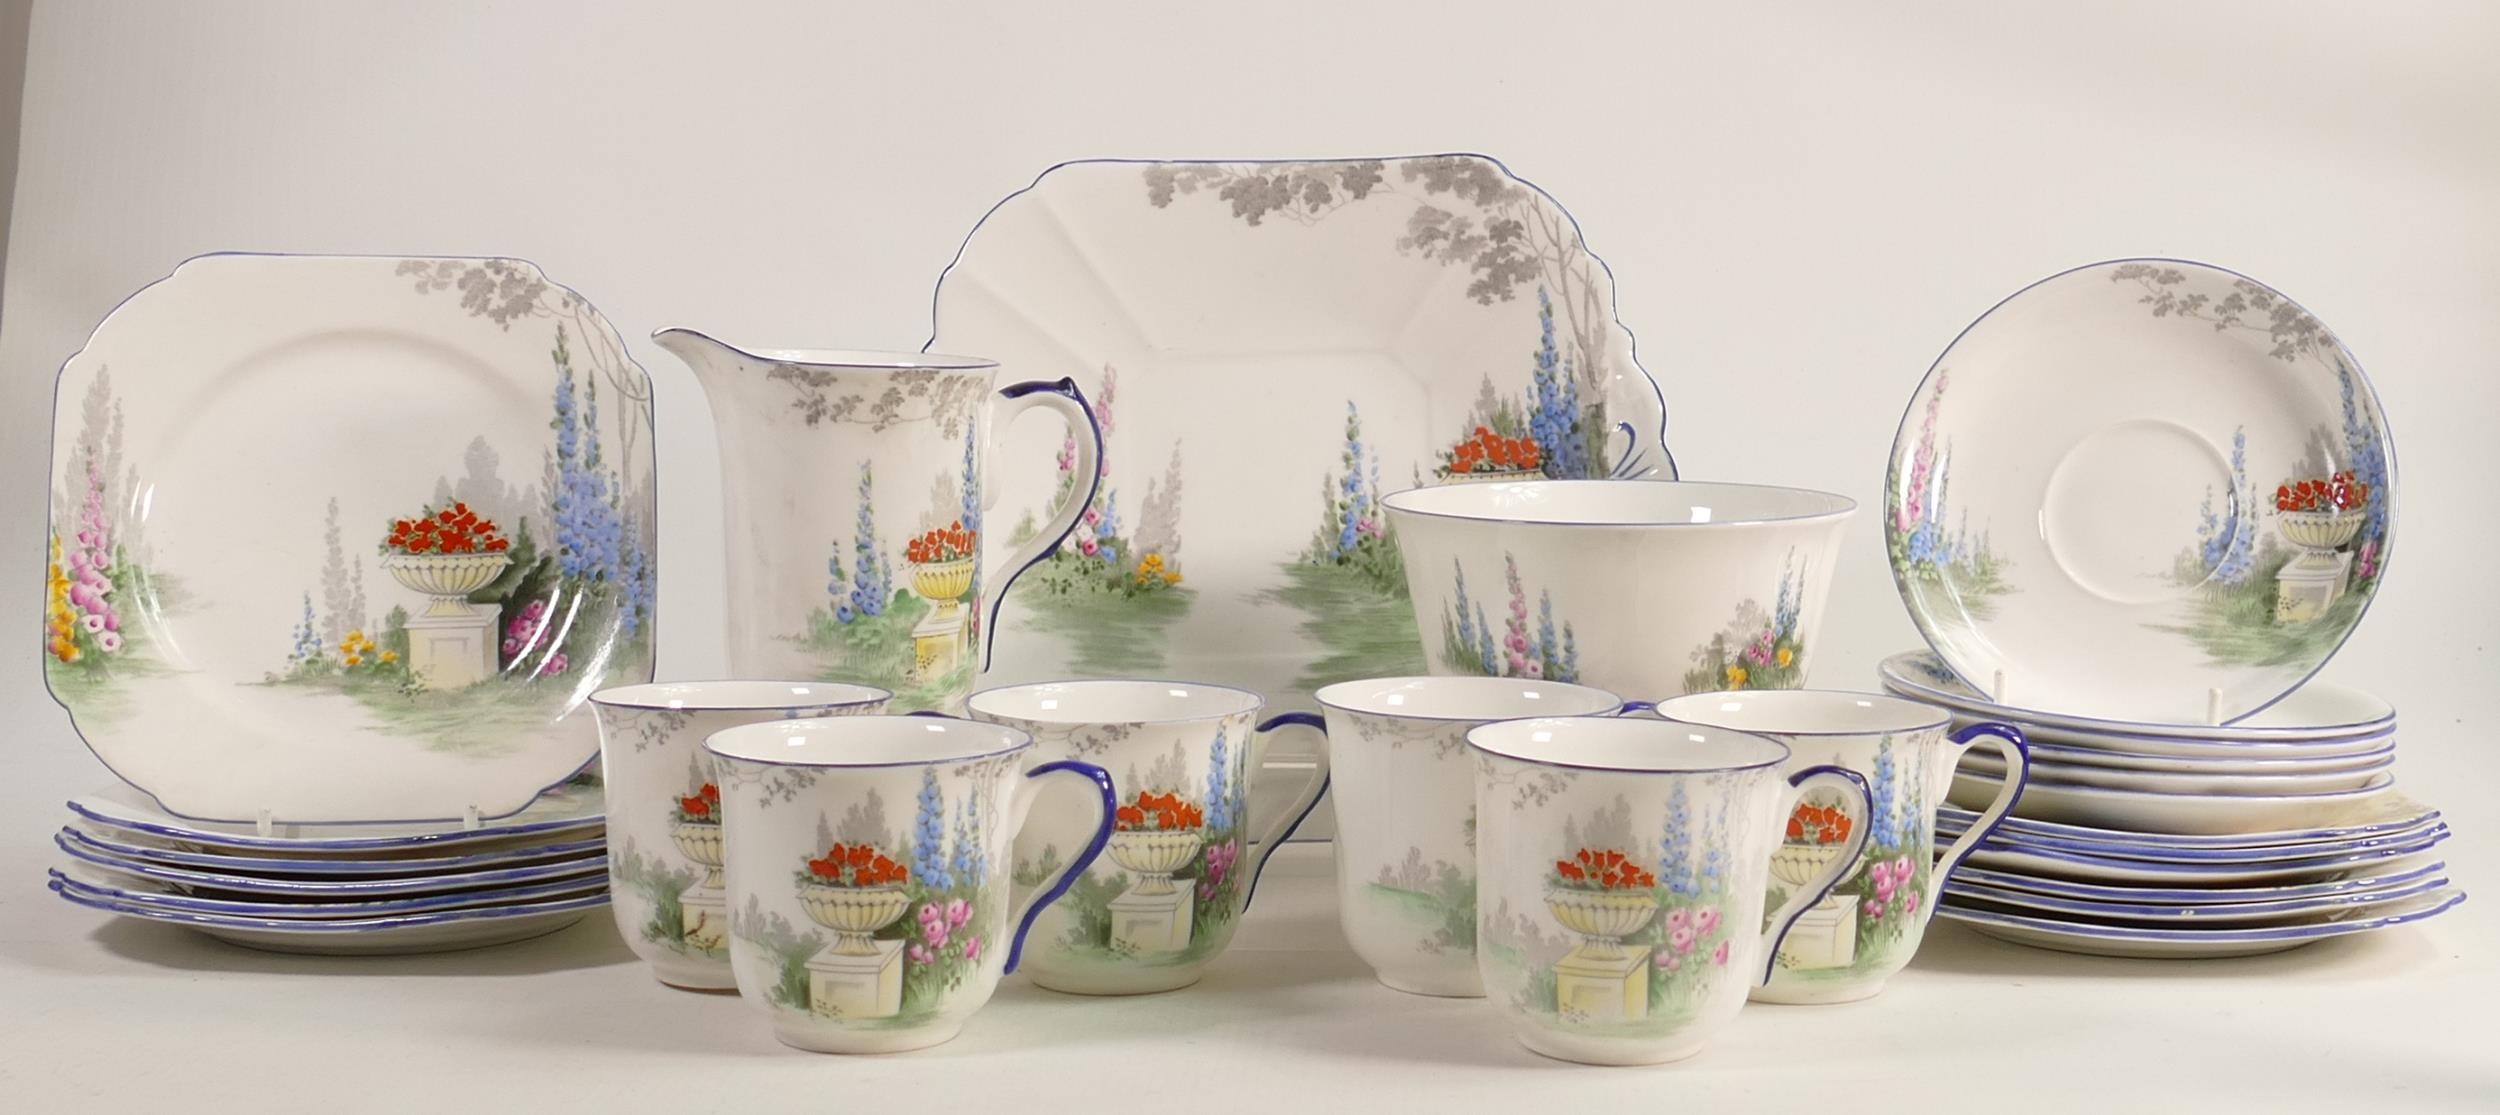 Shelley Vincent shape tea set, pattern 11618, Garden Urn pattern. Consisting of 6 cups & saucers, 12